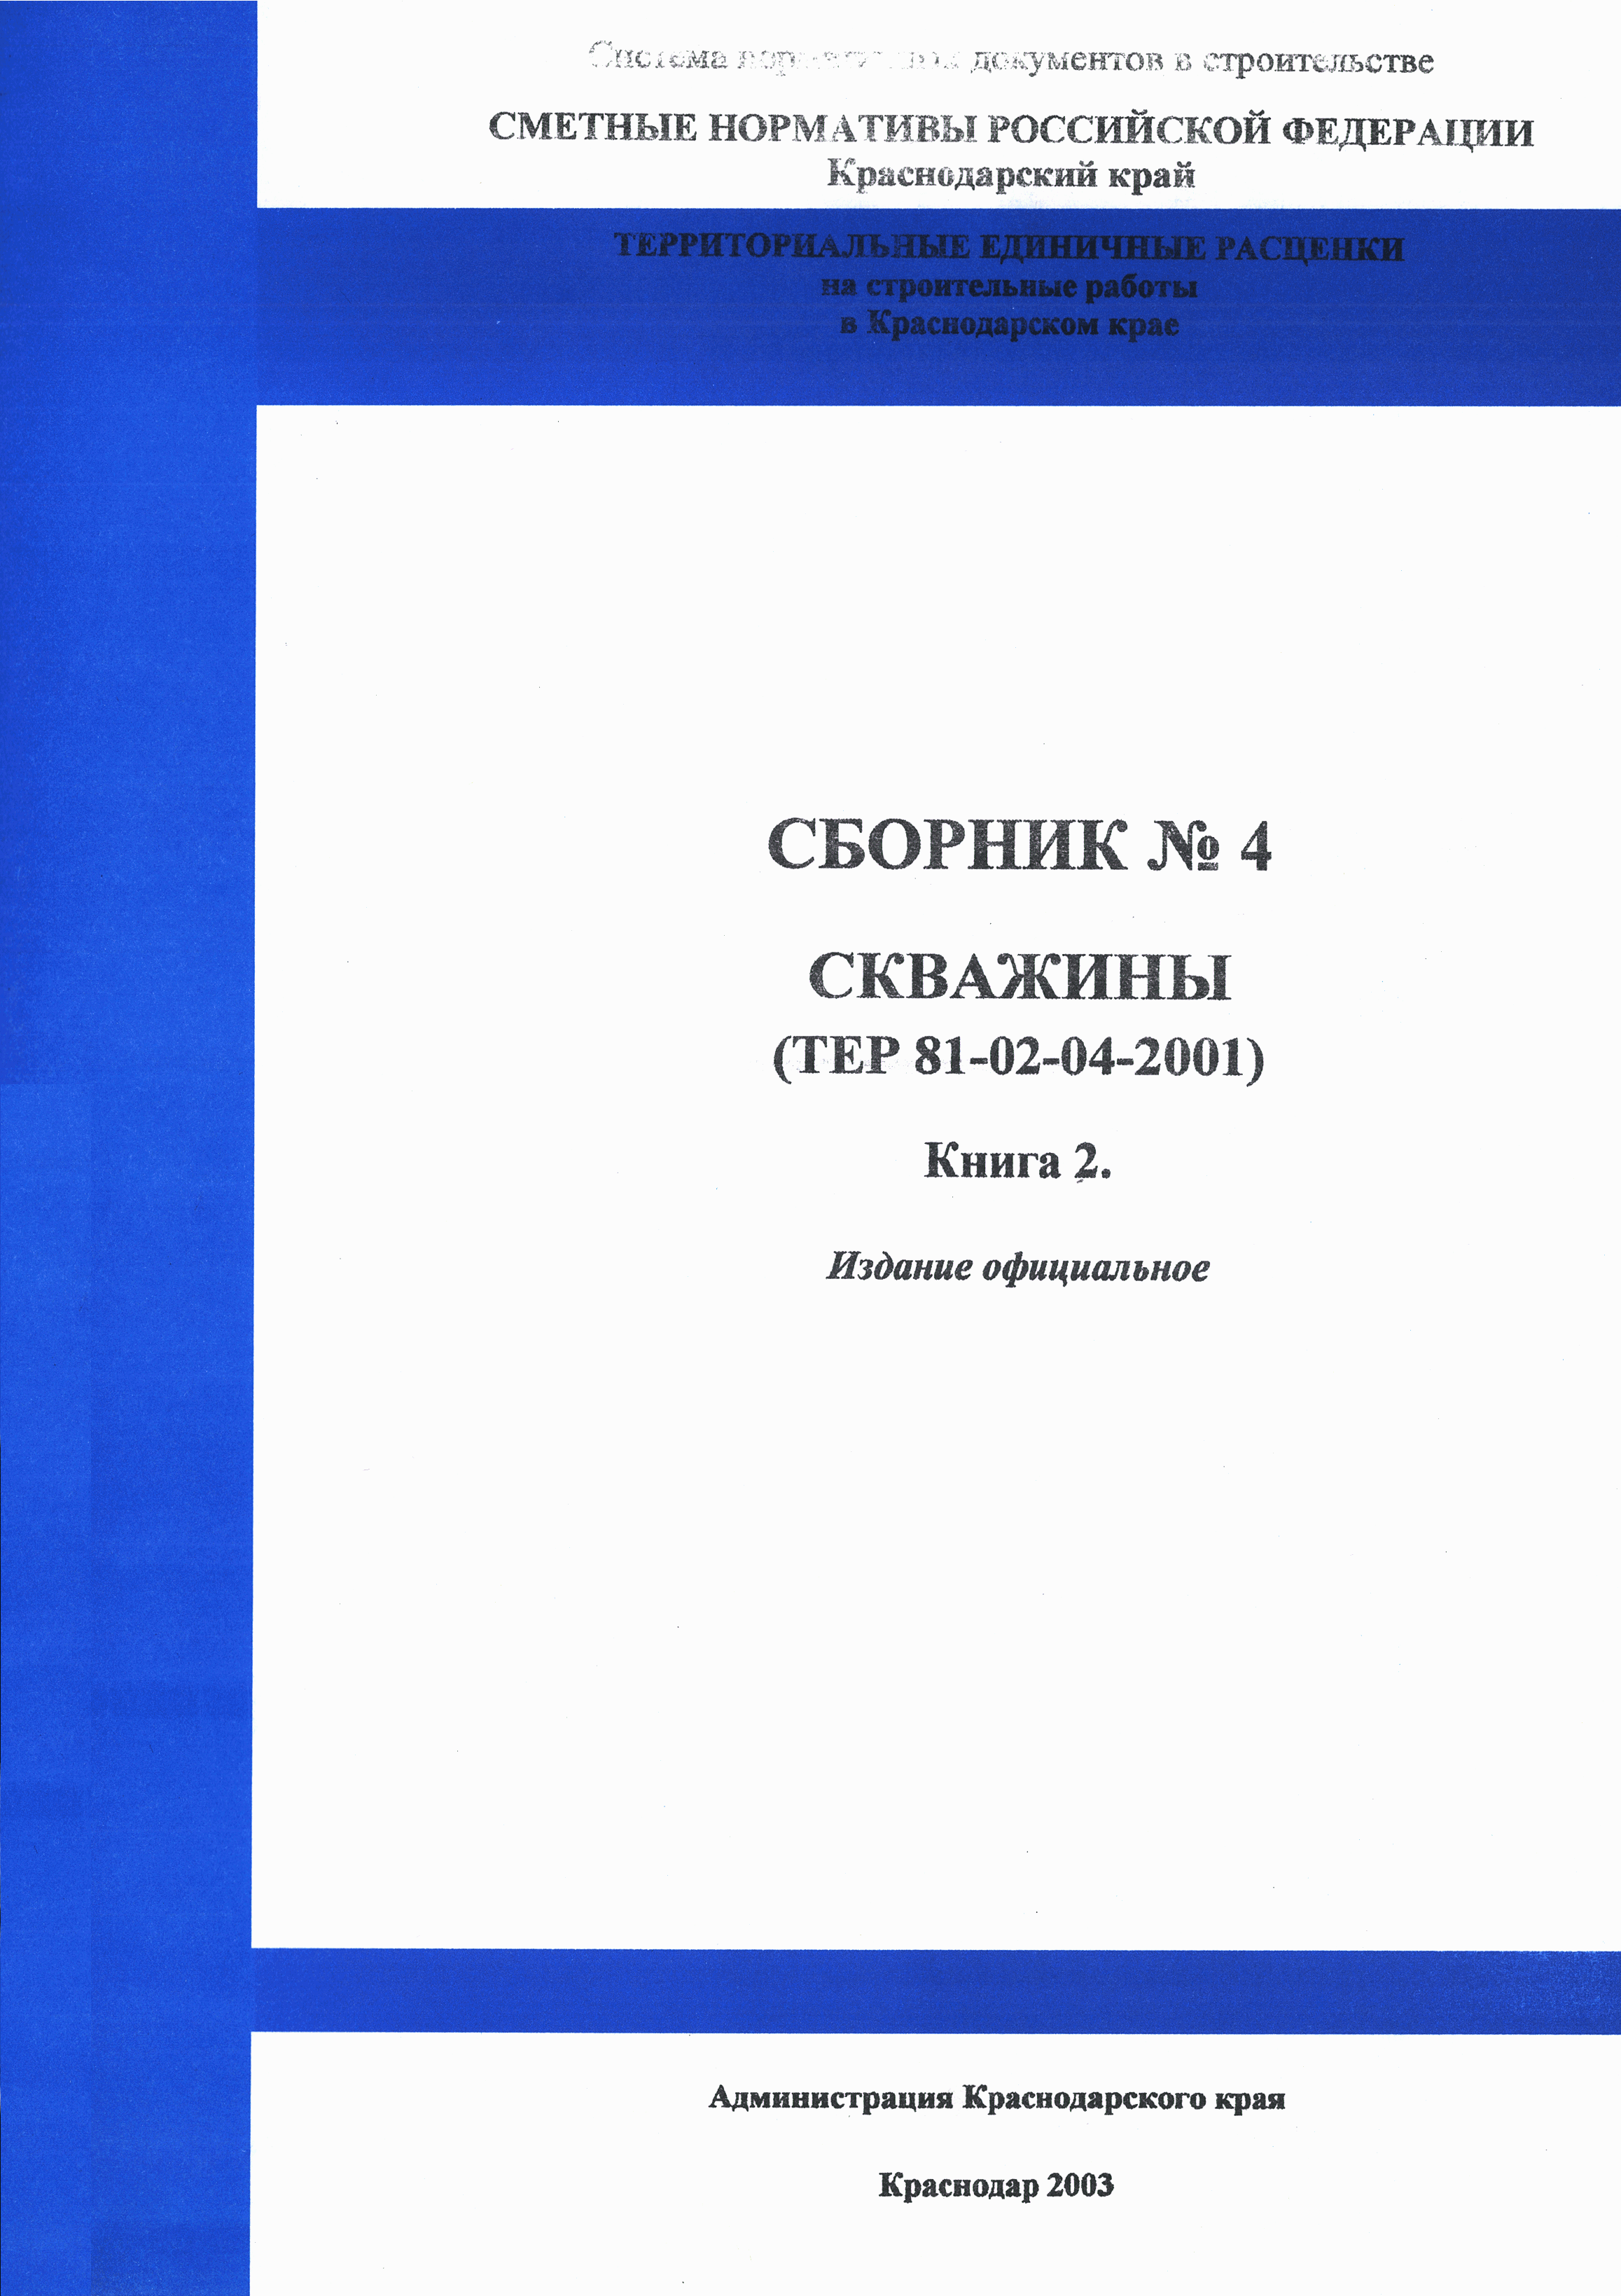 ТЕР Краснодарский край 2001-04